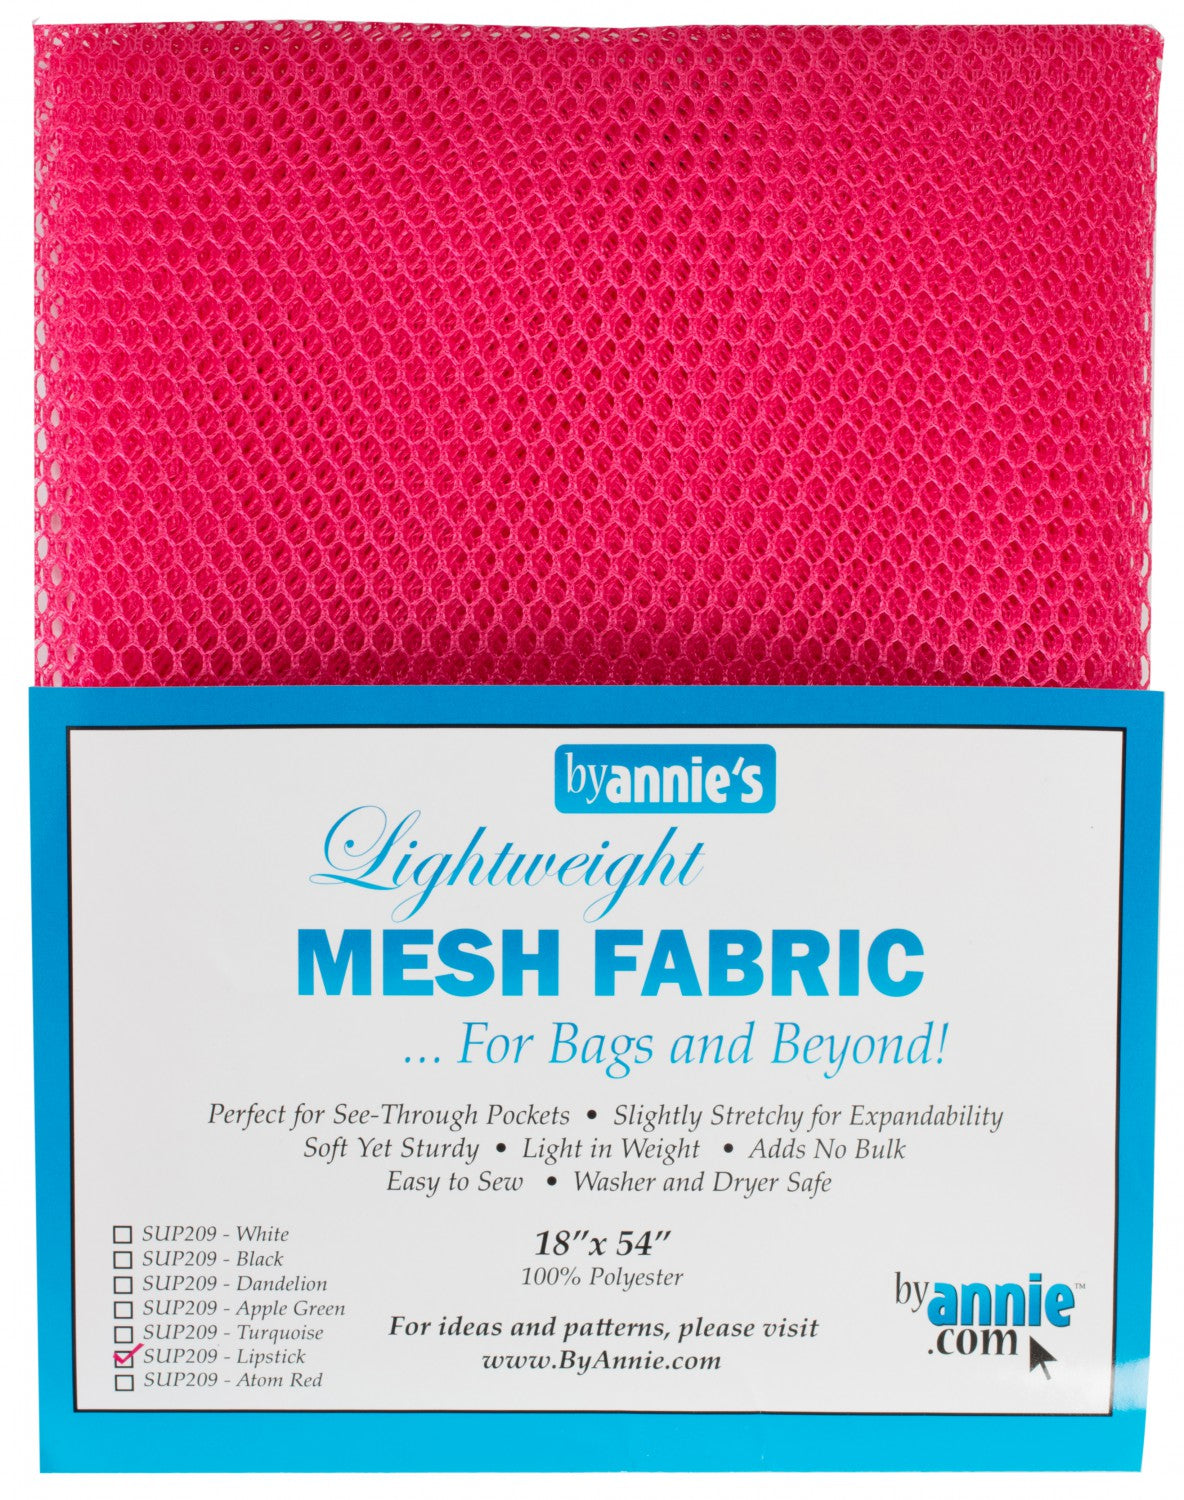 ByAnnie's Mesh Fabric 18" x 54" Lipstick